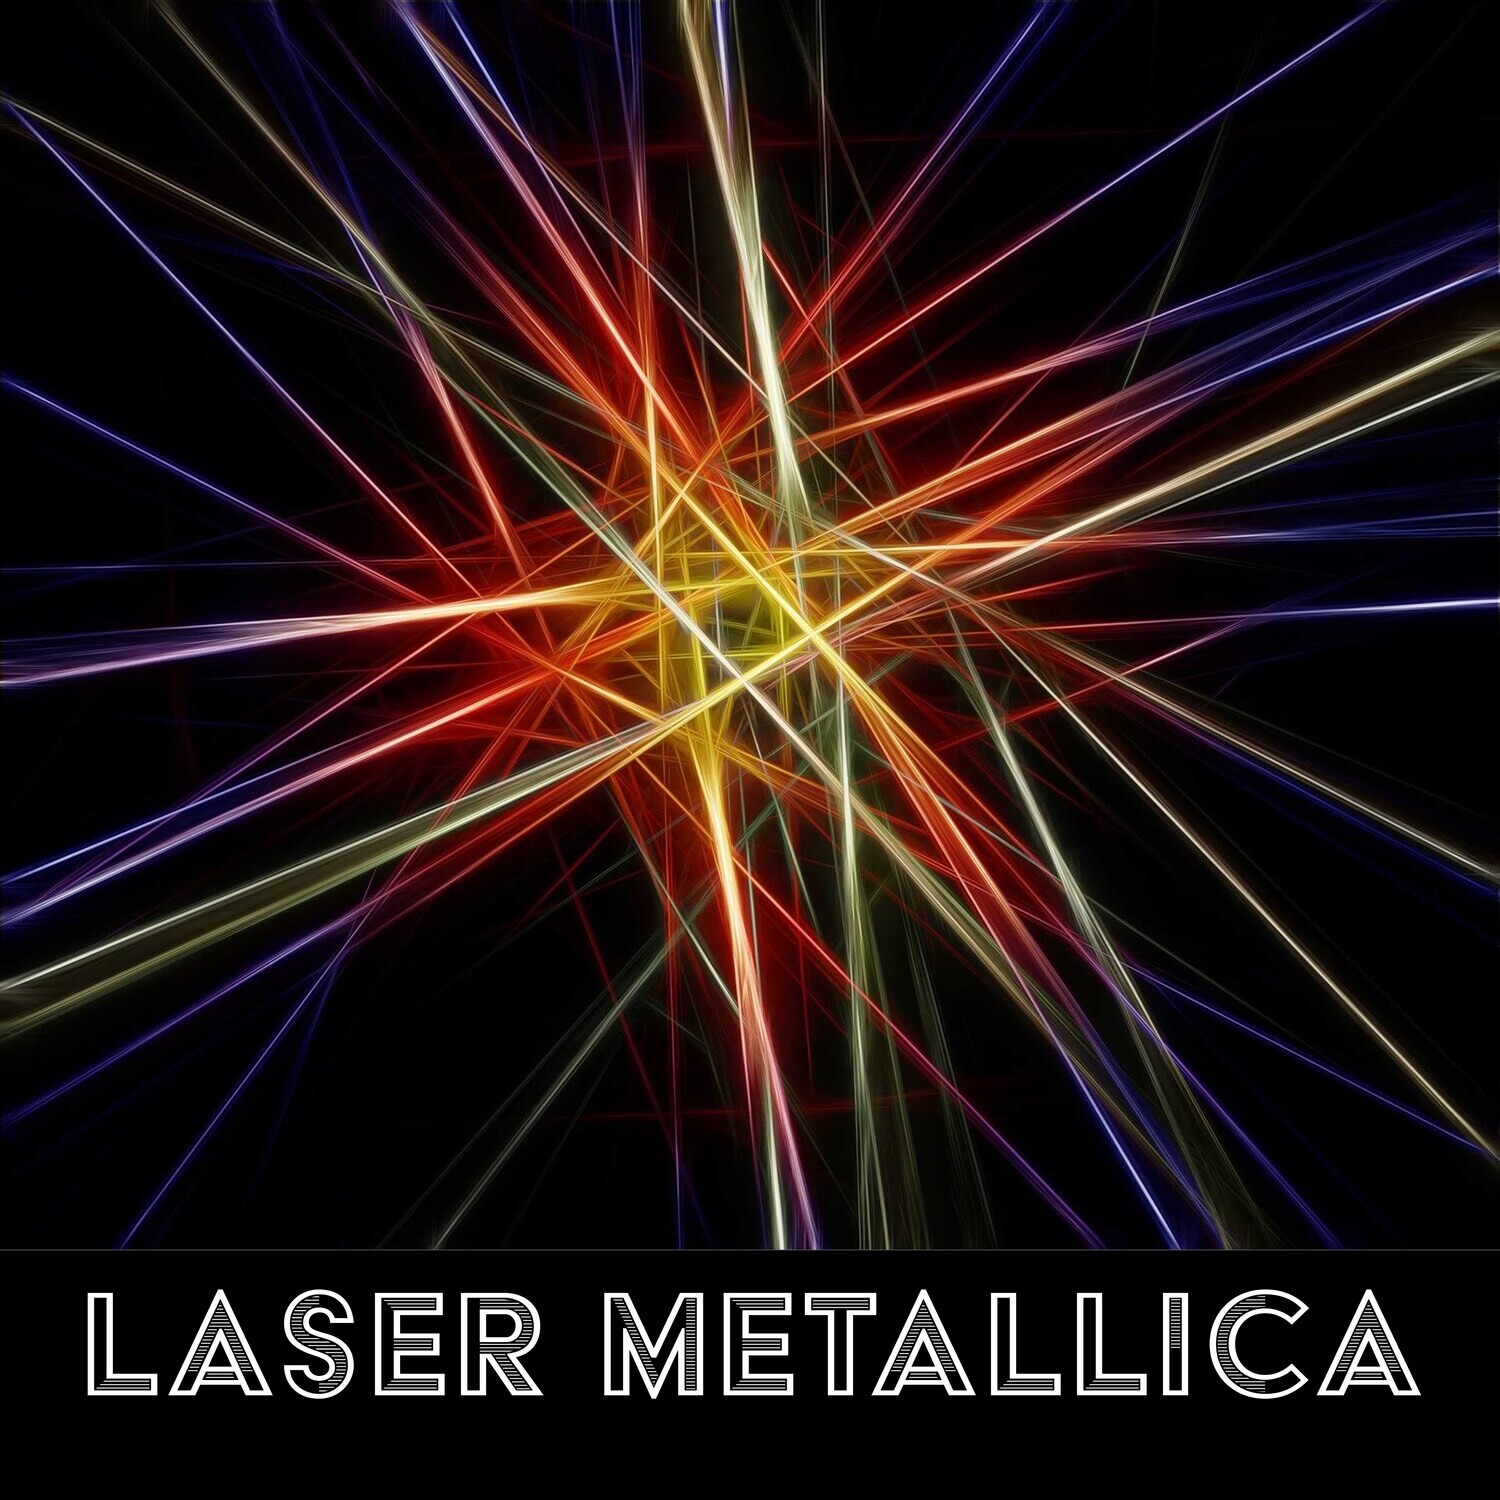 Laser Metallica
Saturday, July 6, 7pm